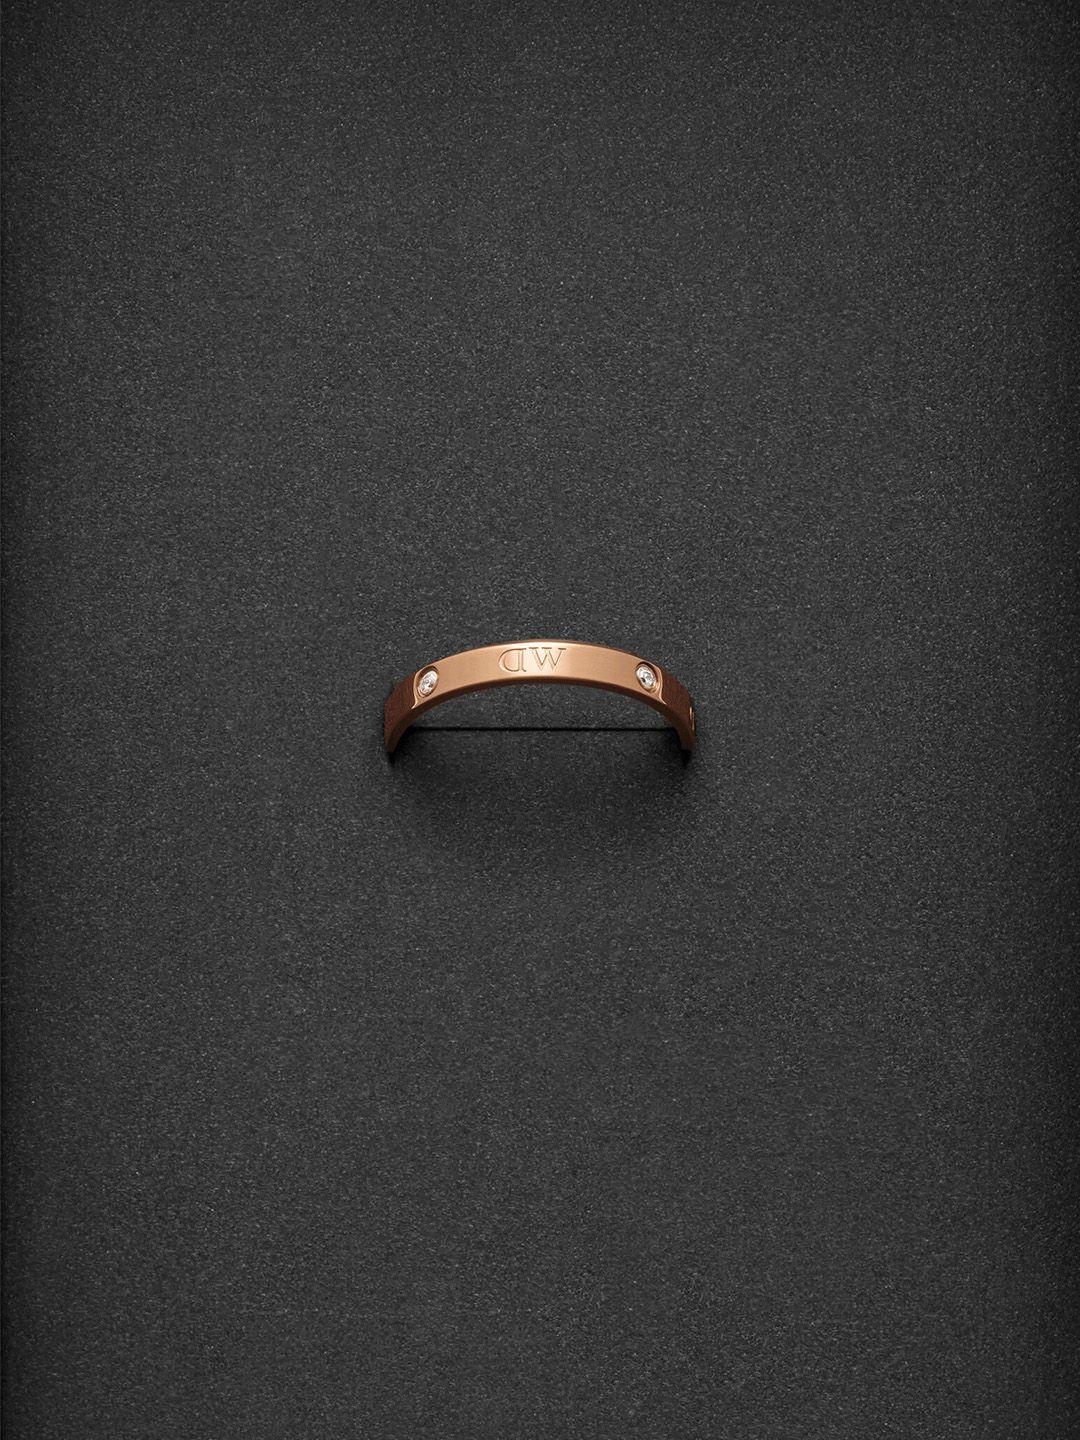 daniel wellington rose gold-plated stainless steel crystal-studded finger ring